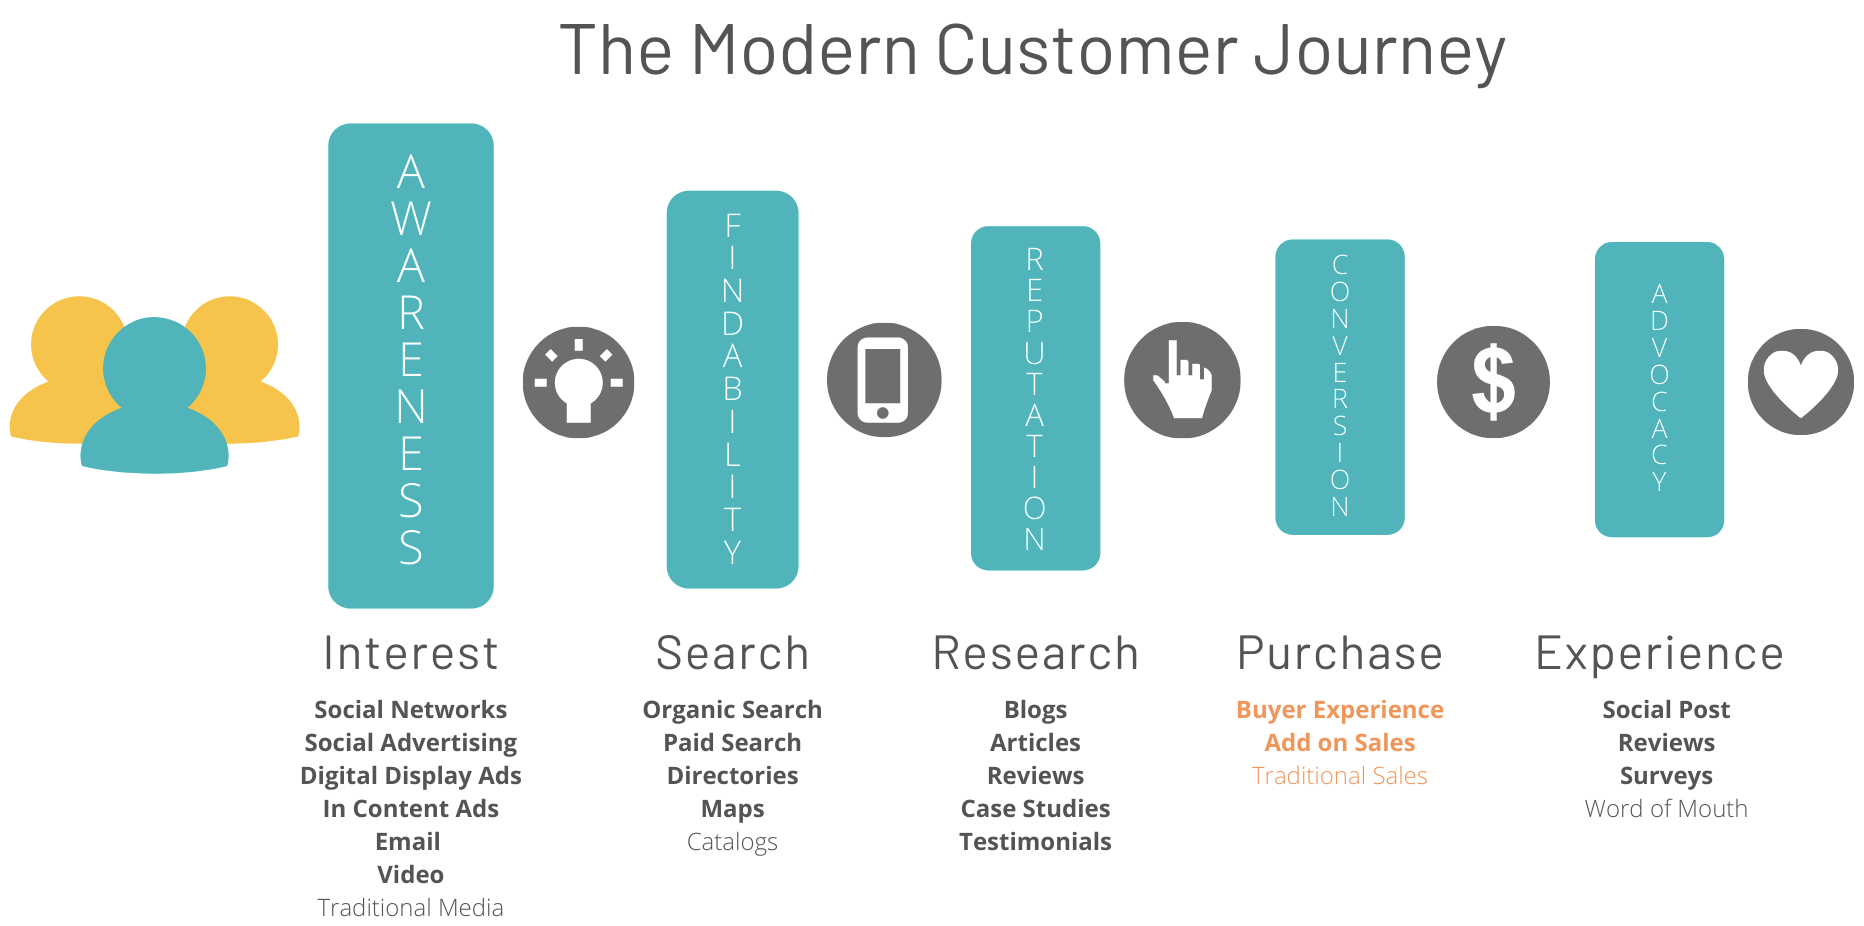 The Modern Customer Journey - Modern Marketing Department